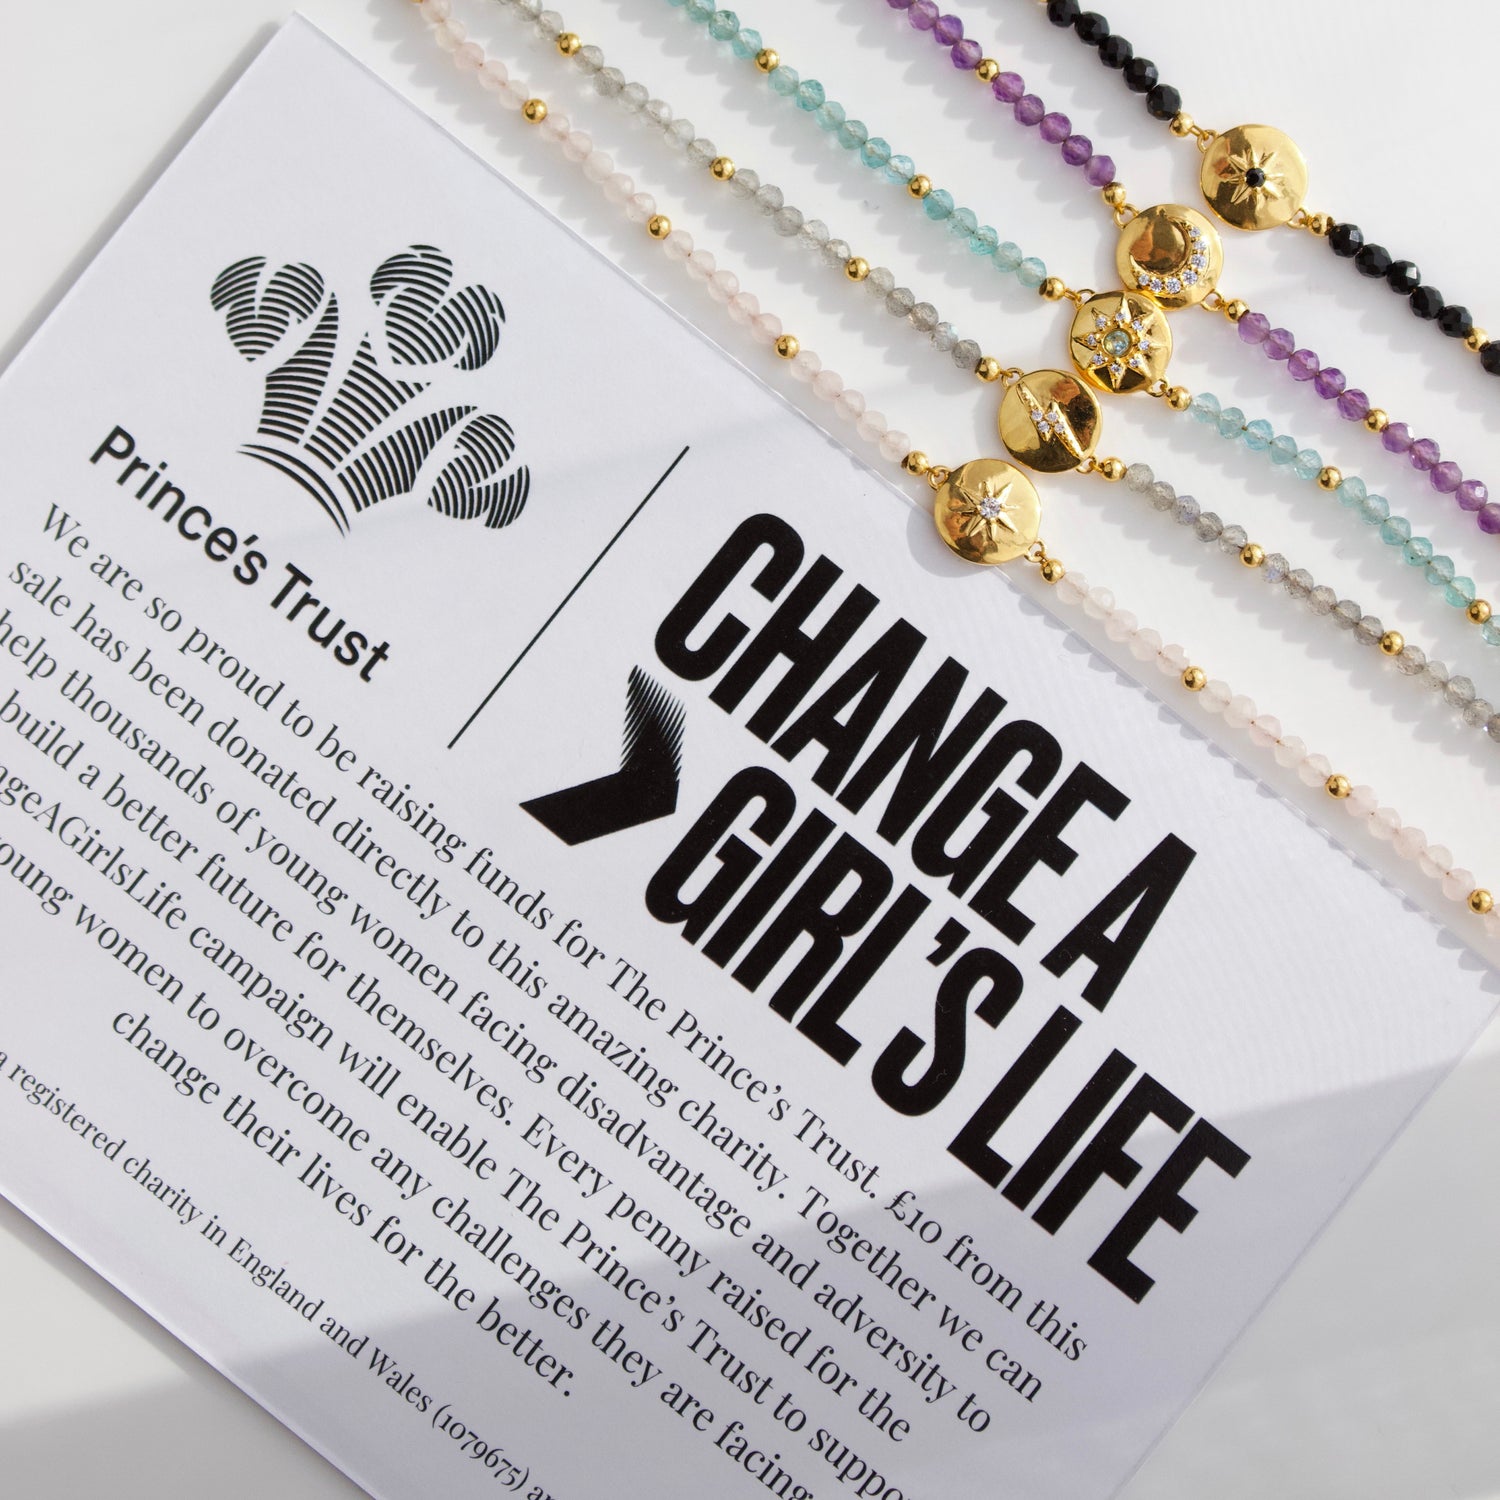 Carrie elizabeth manifestation charity princes trust rose quartz bracelet